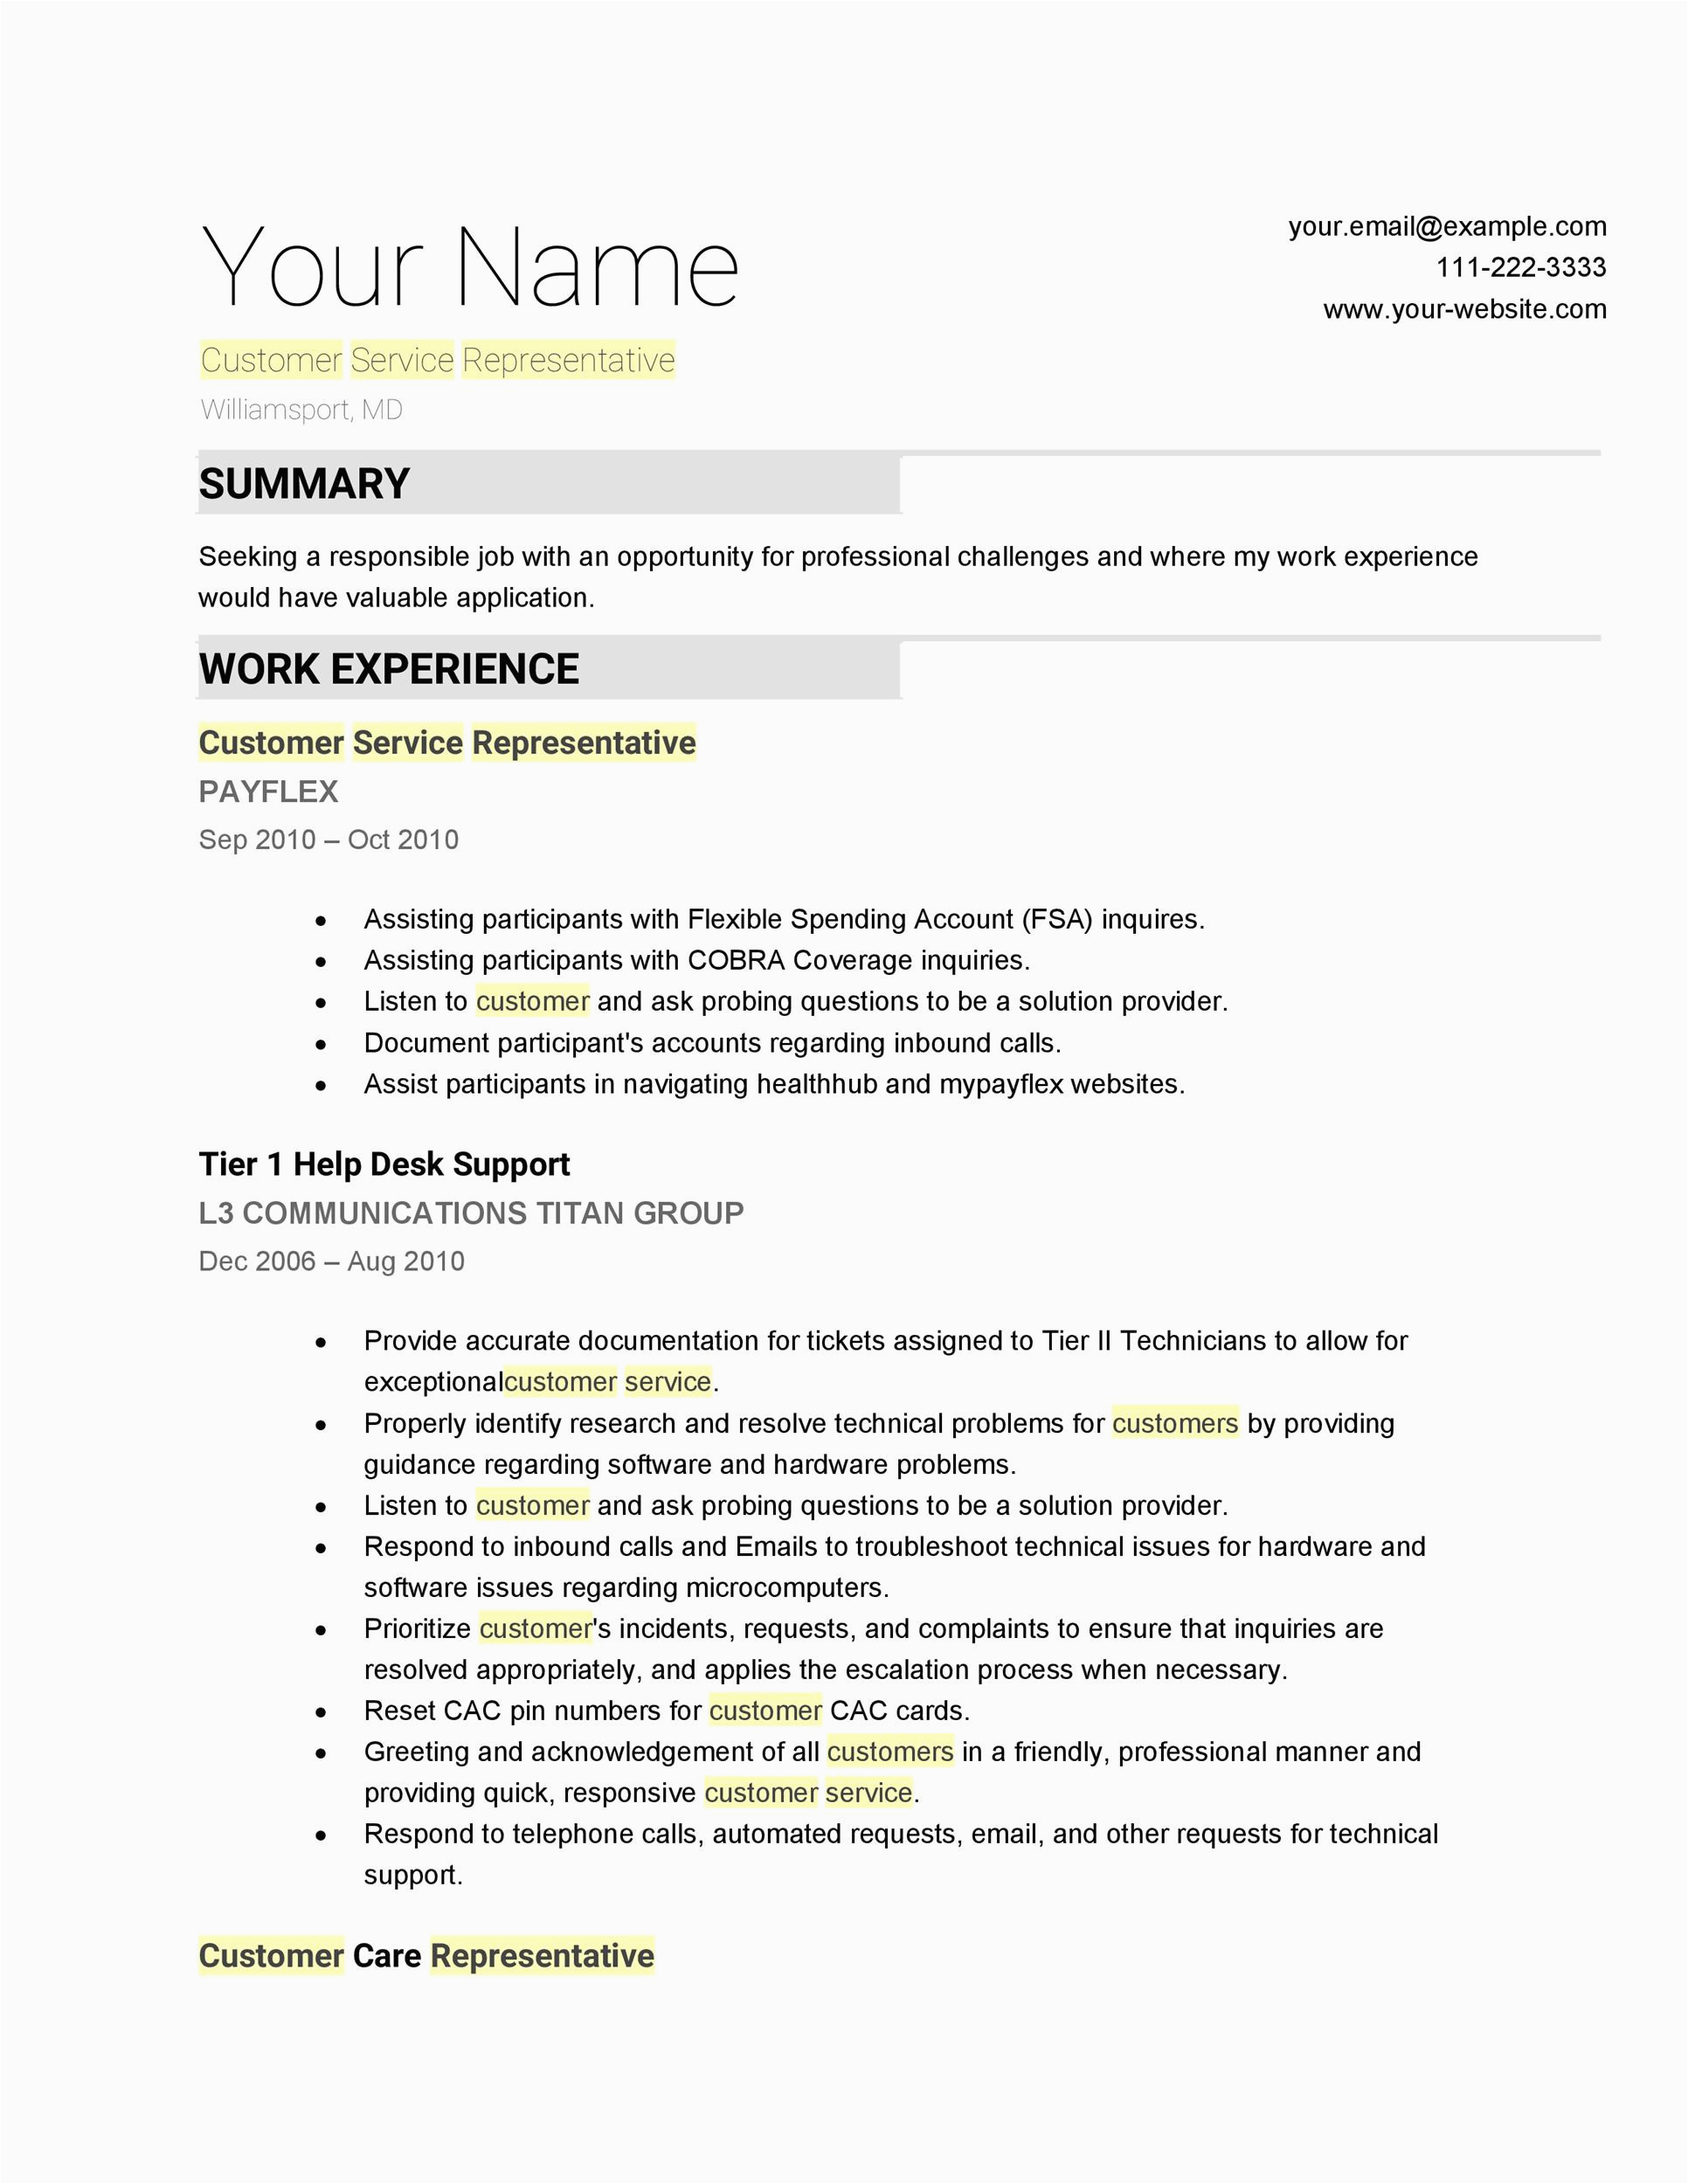 Work Experience Resume Sample Customer Service 30 Customer Service Resume Examples Templatelab